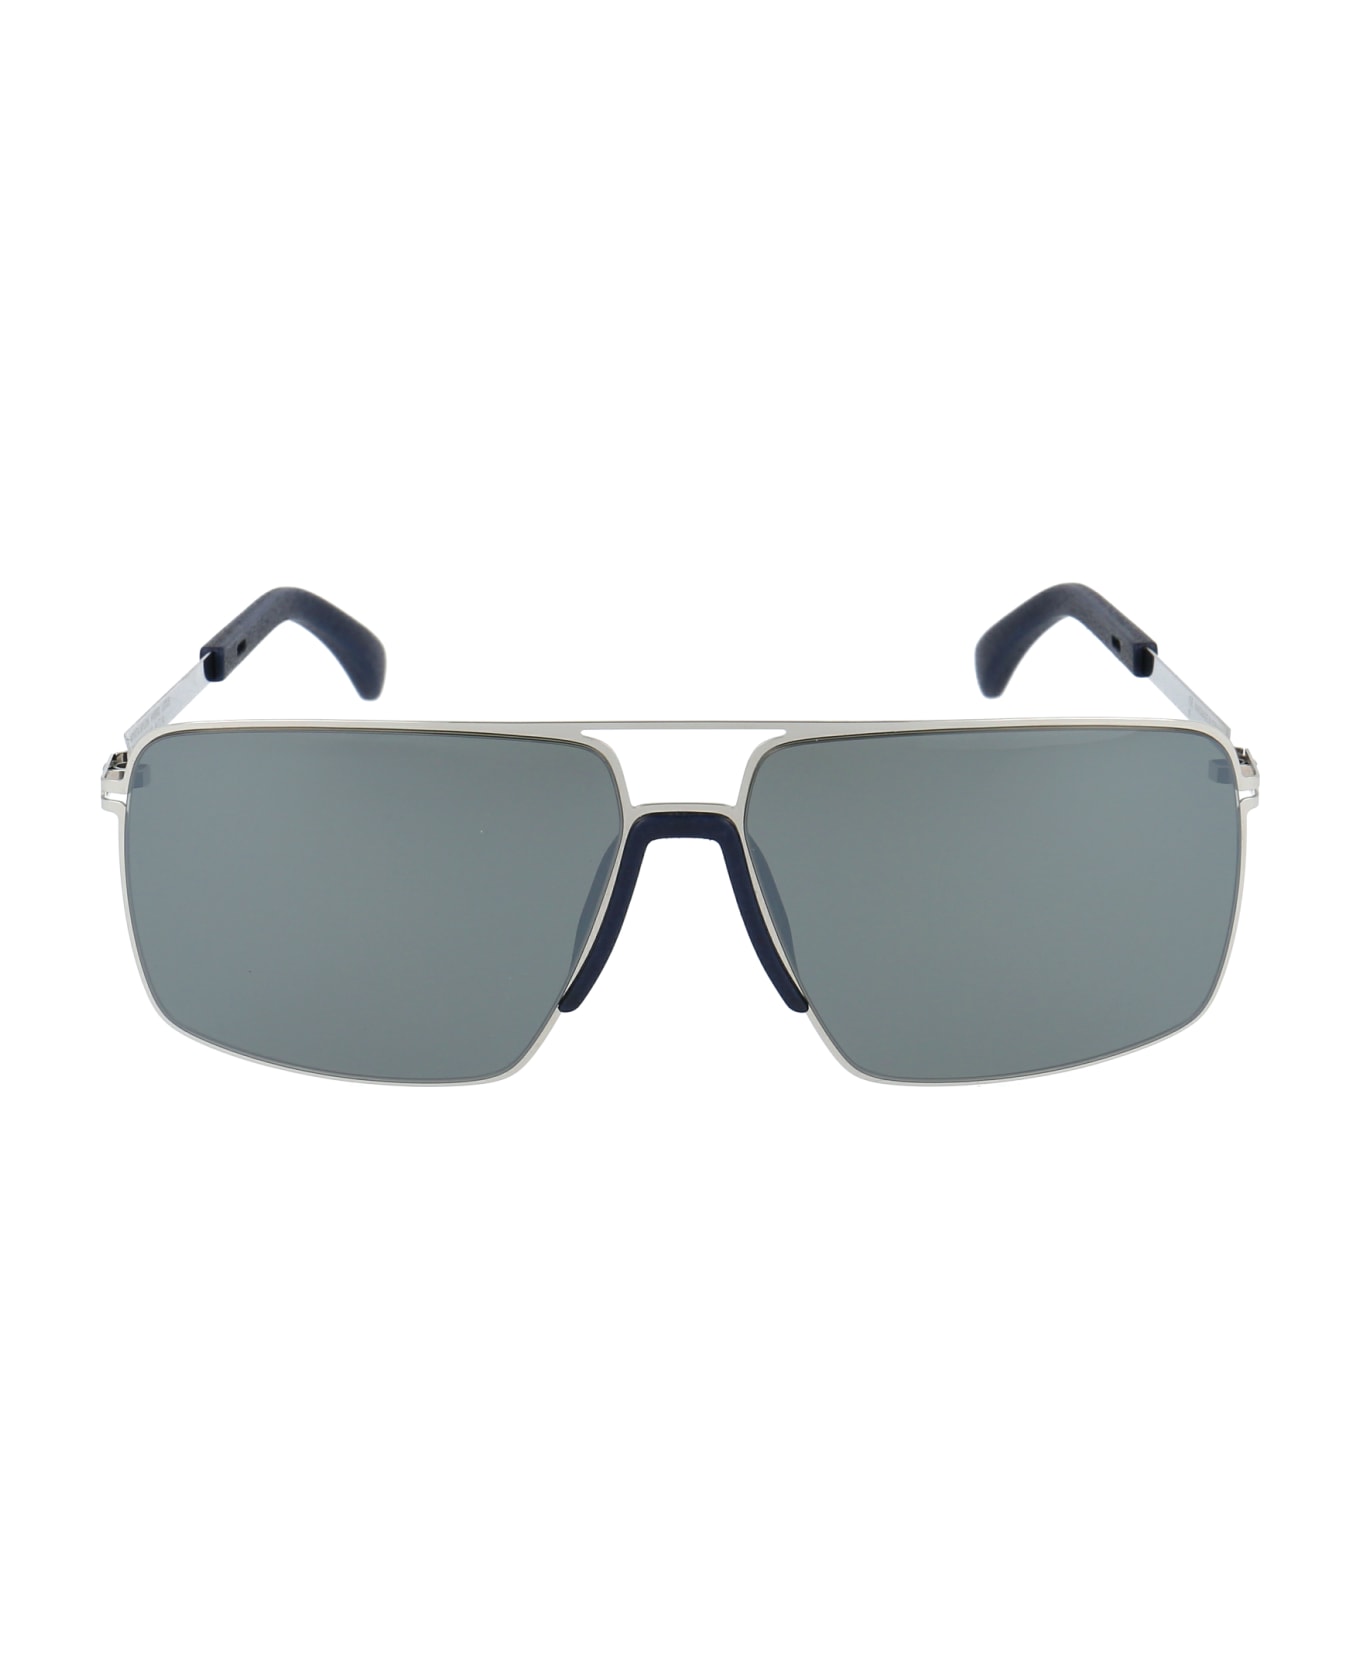 Mykita Lotus Sunglasses - 309 MH10 Navy Blue/Shiny Silver Light Silver Flash サングラス